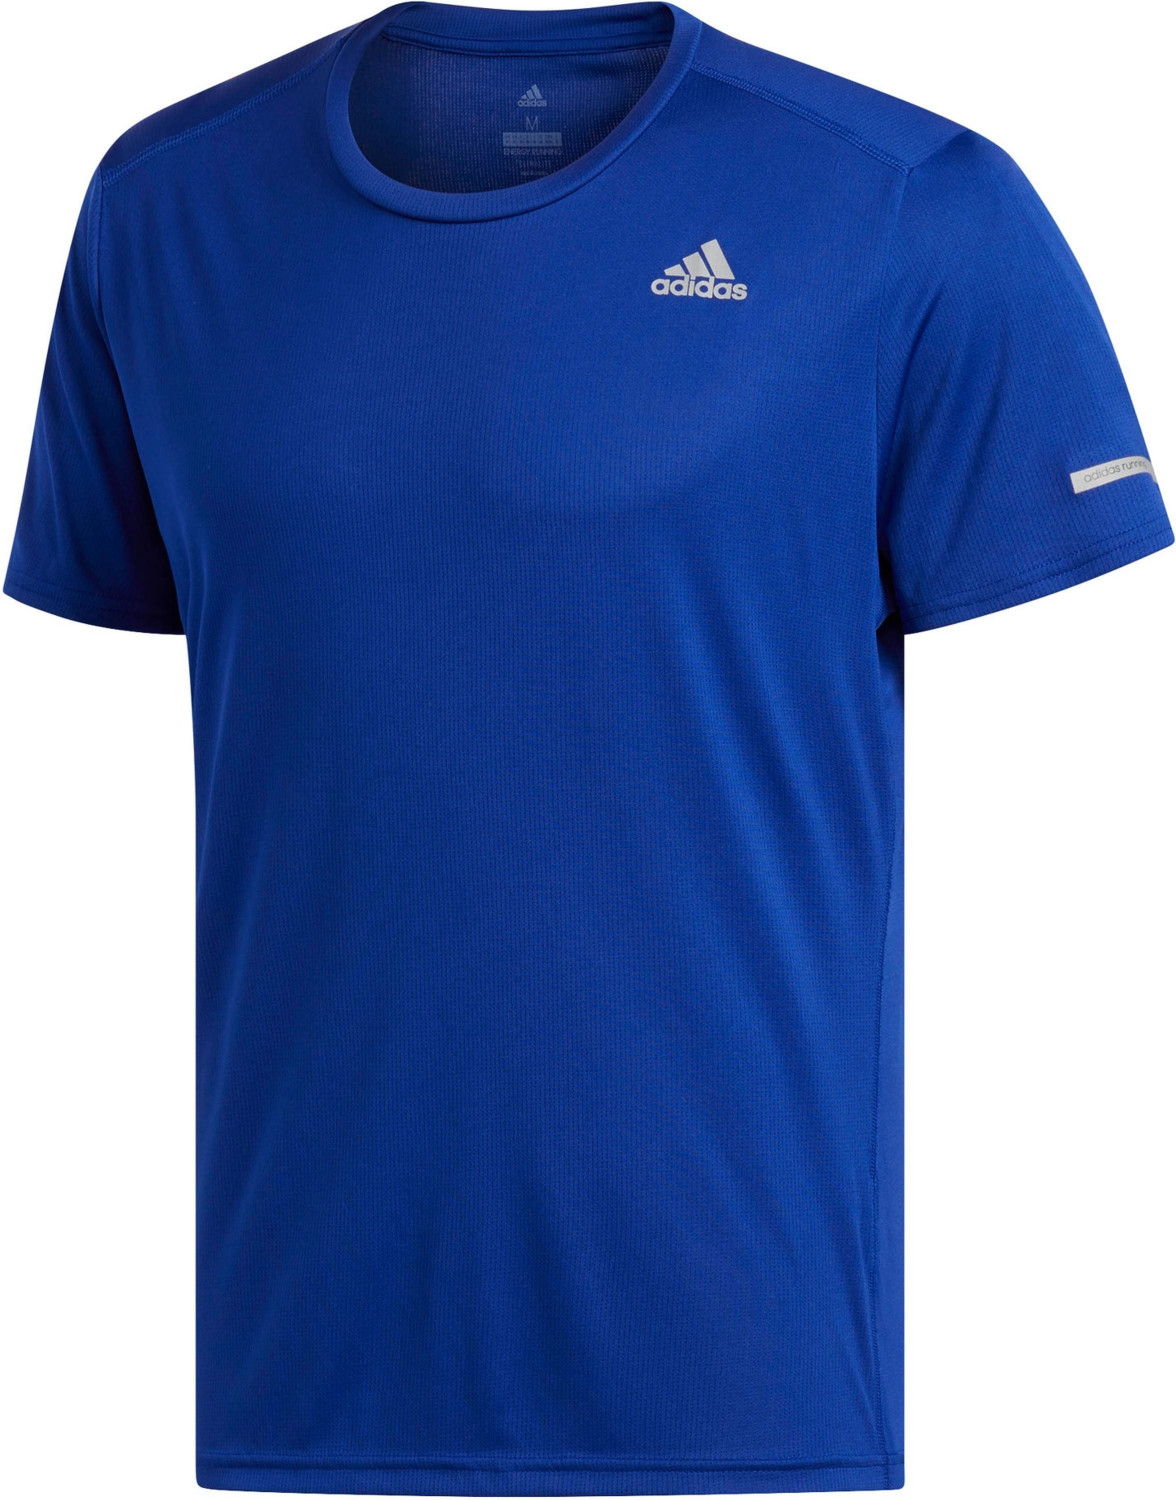 Adidas Run T-Shirt Men